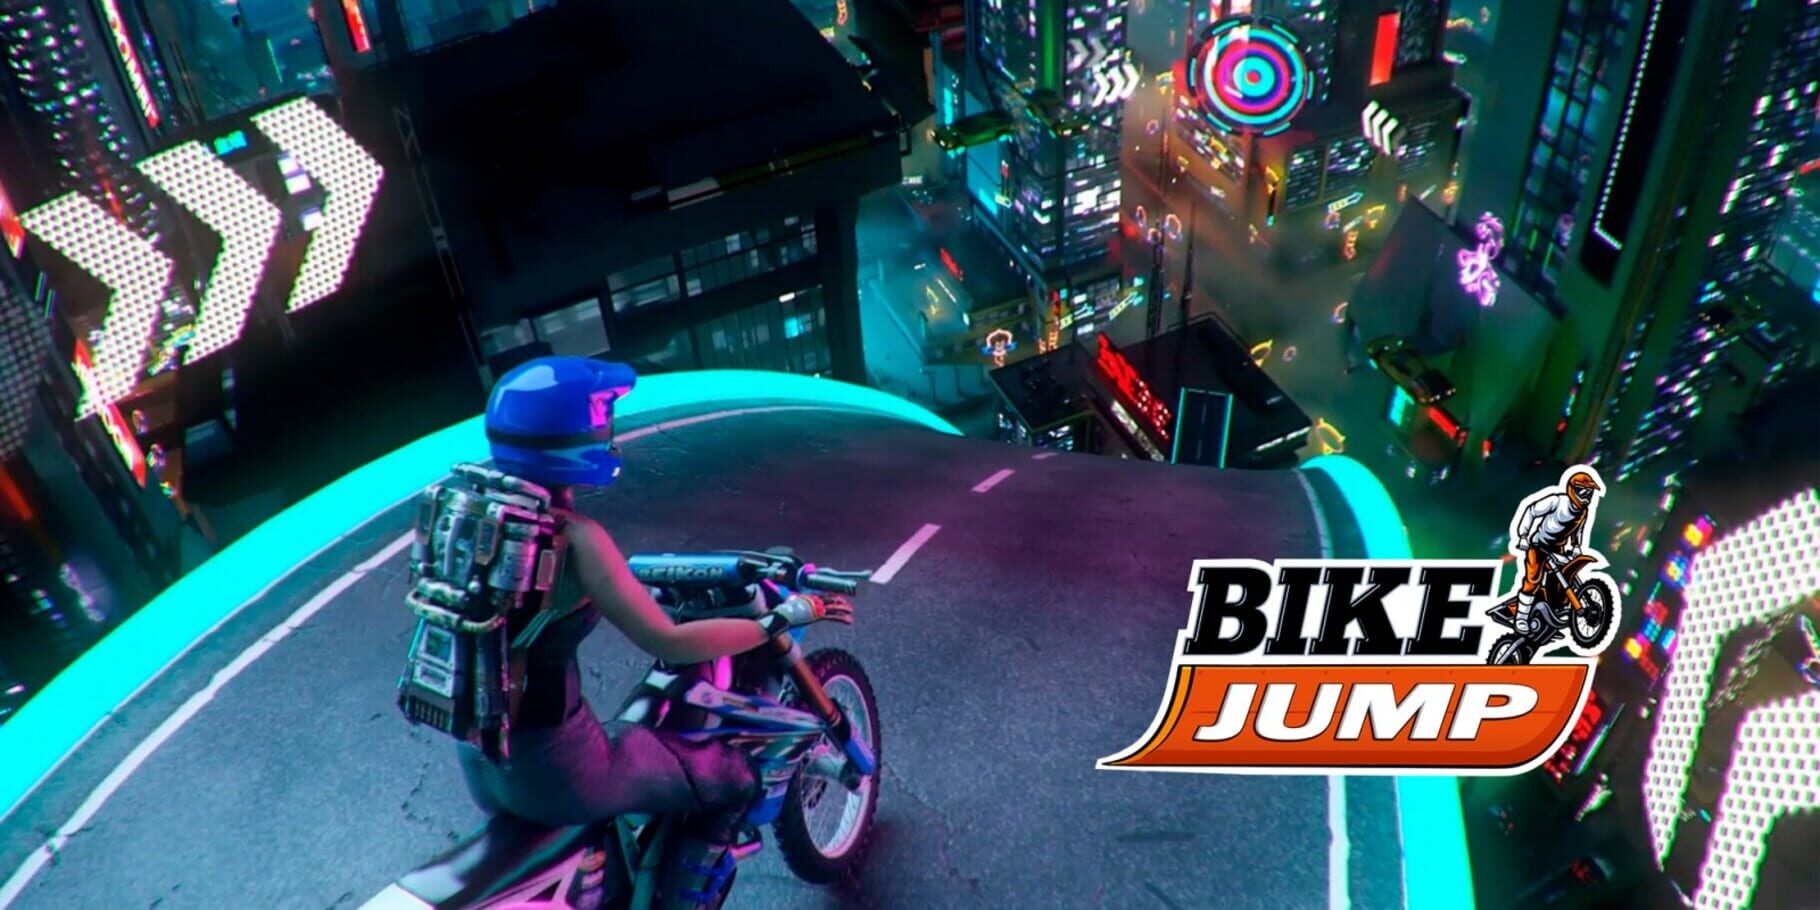 Bike Jump artwork